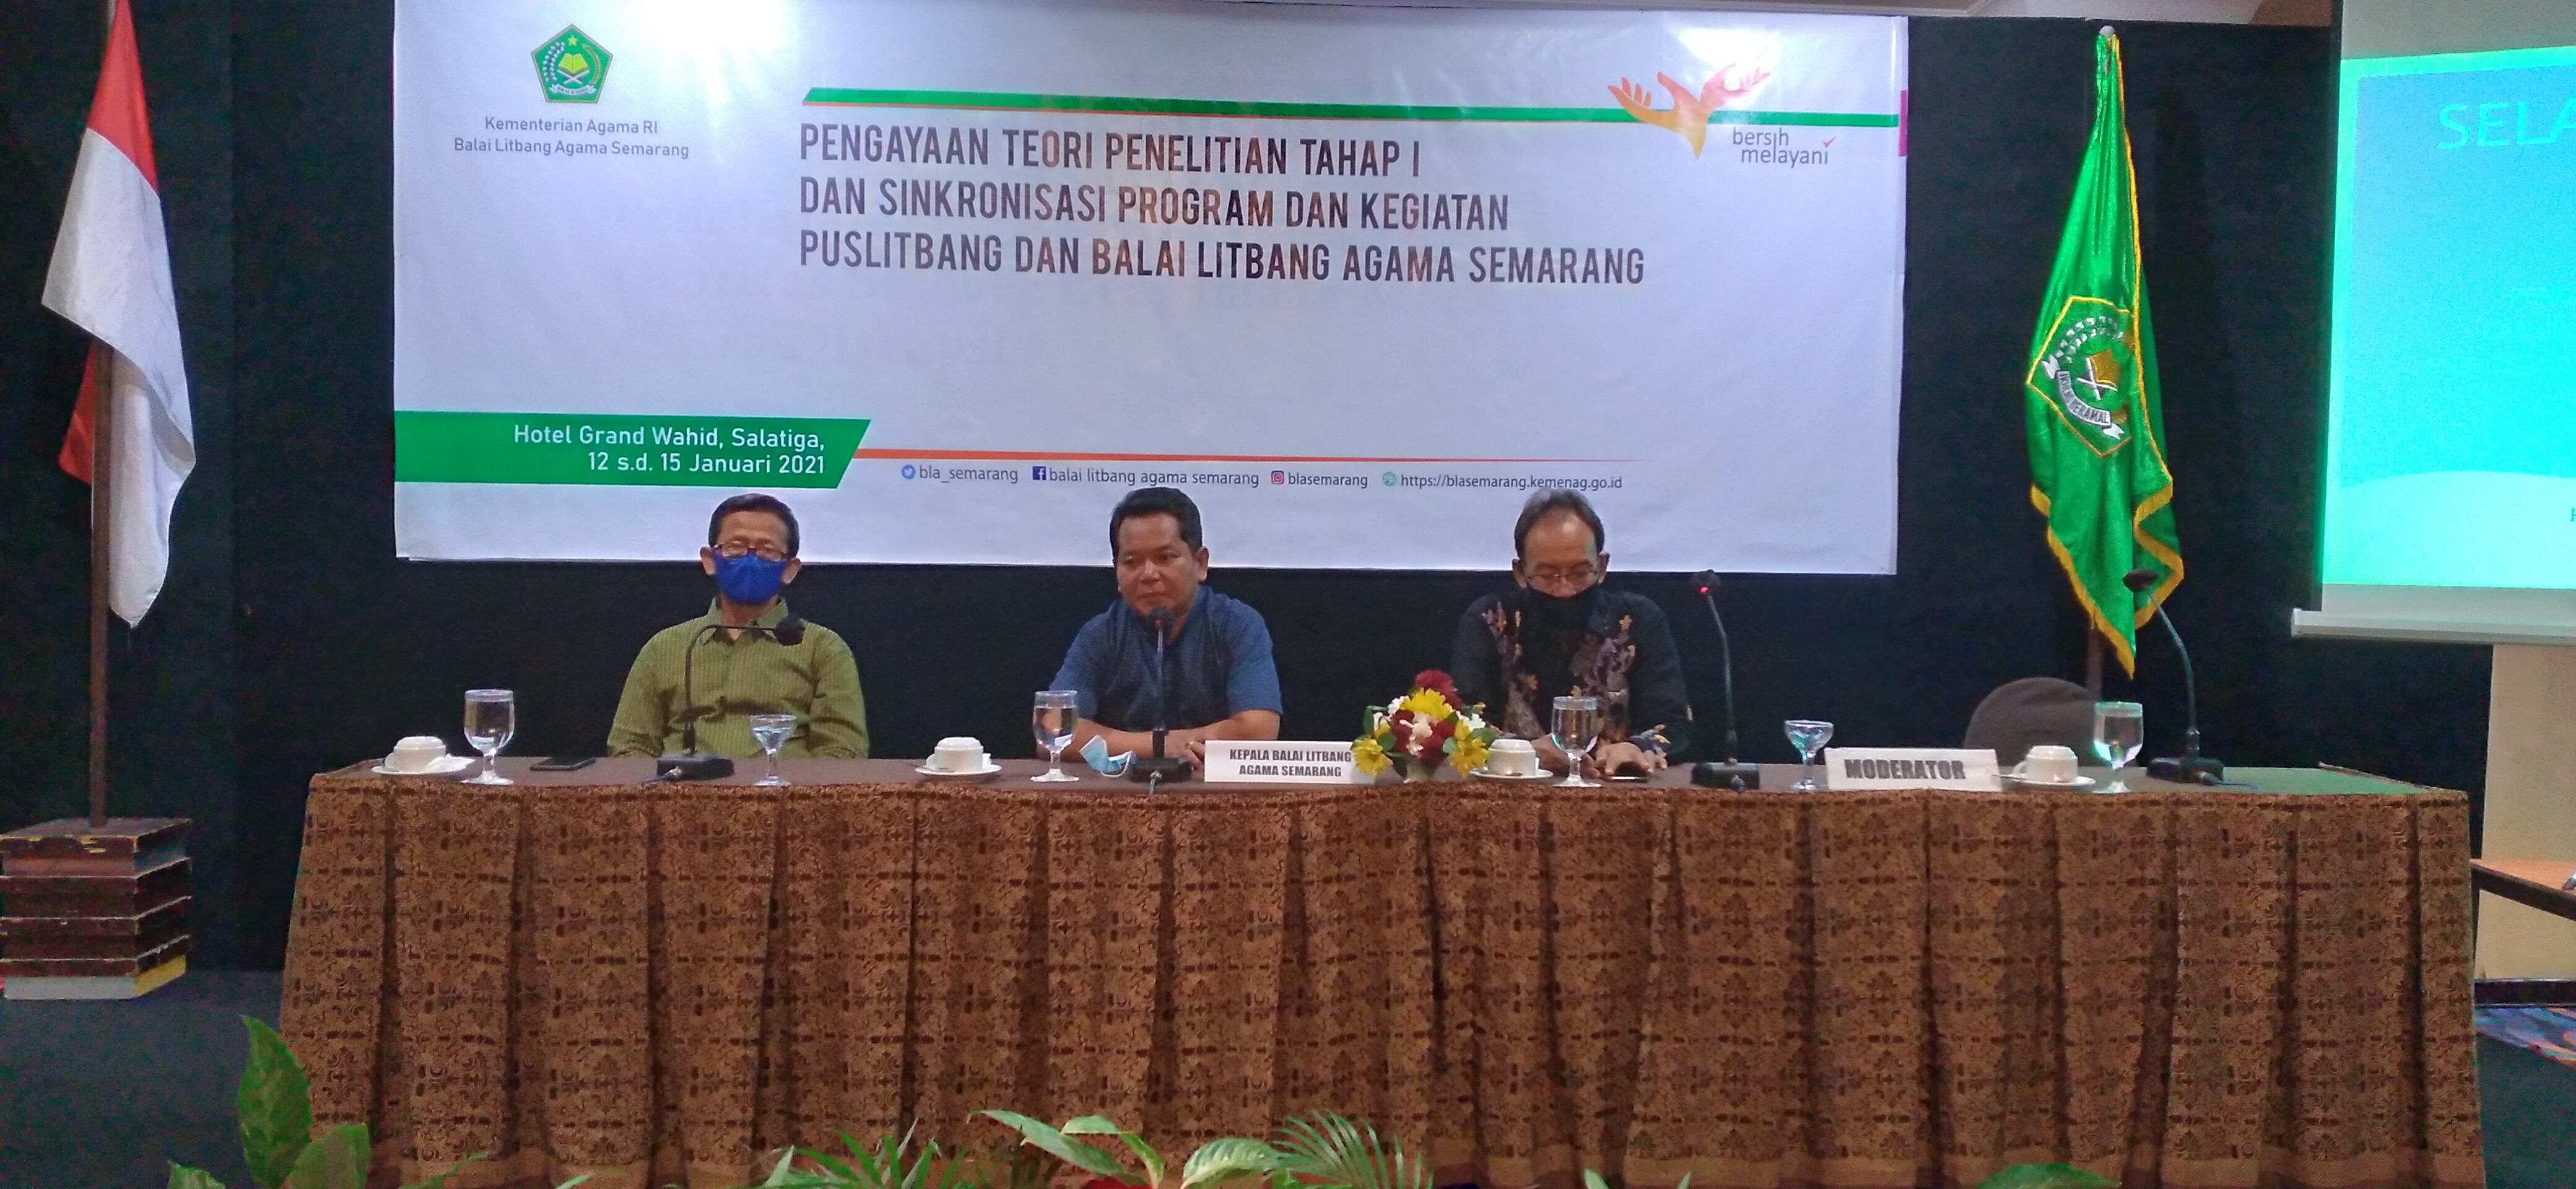 Pengayaan Teori dan Sinkronisasi Program Kegiatan Puslitbang dan Balai Litbang Agama Semarang